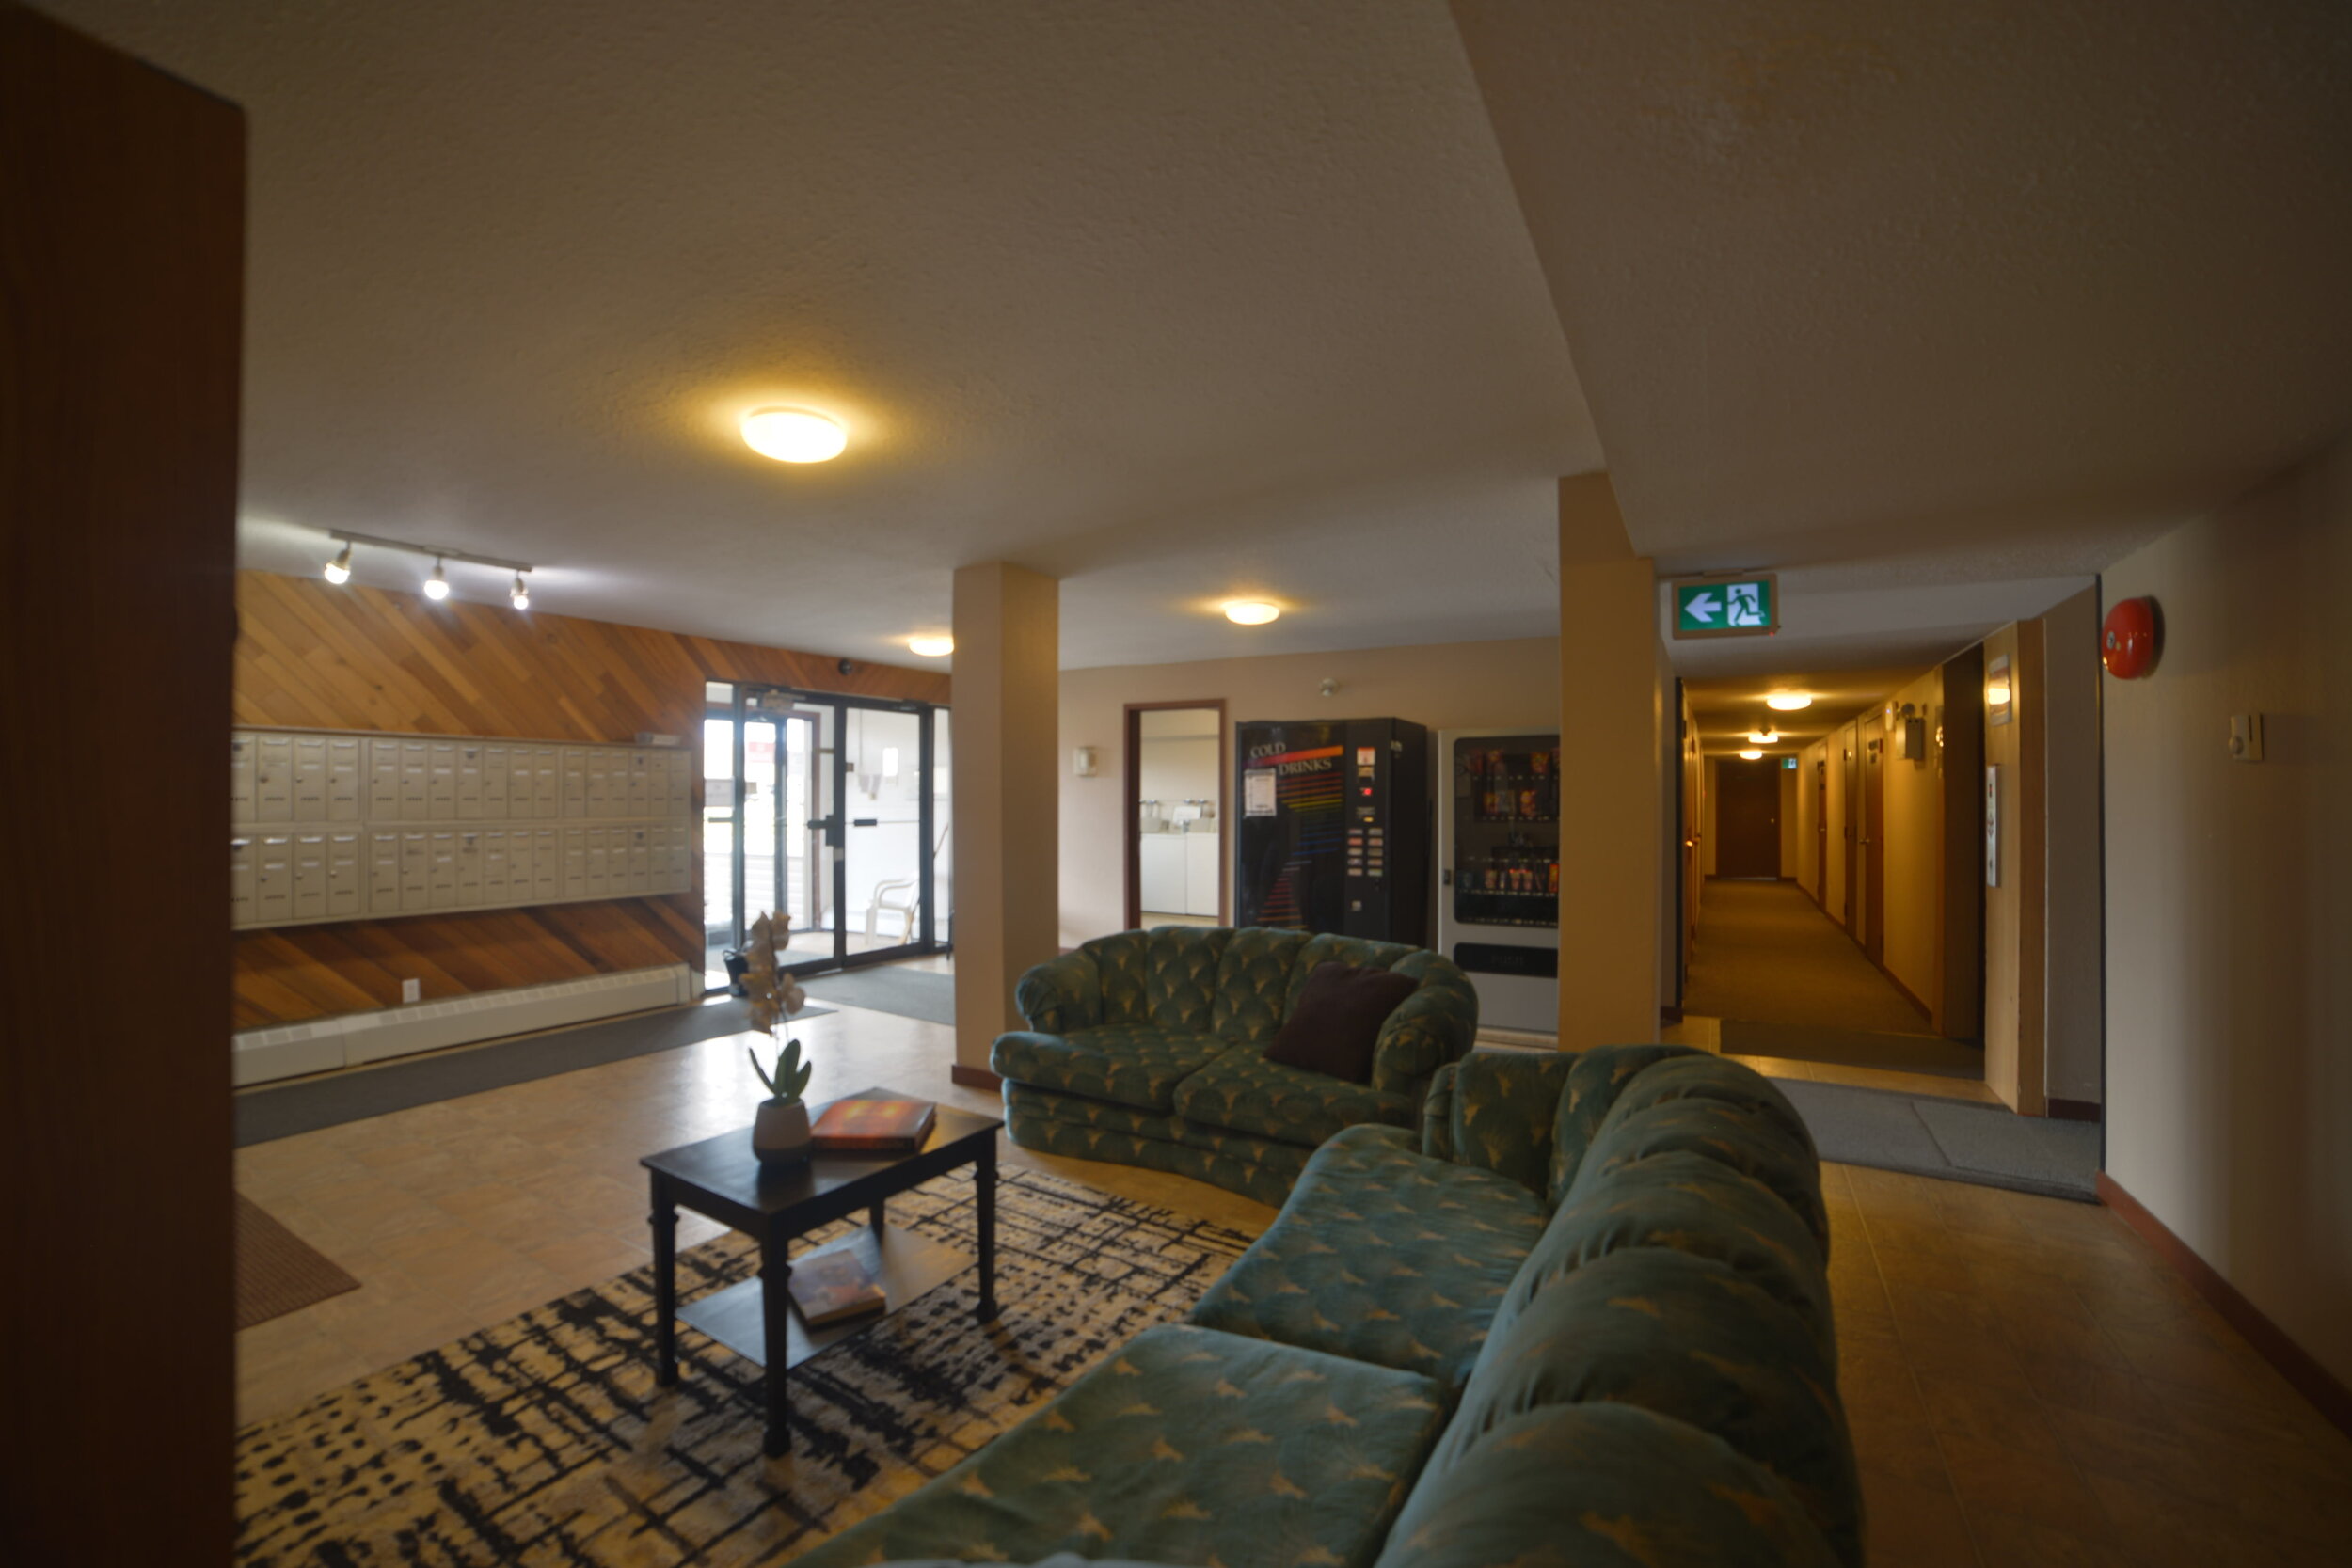 sunridge-apartments-10901-15-st-dawson-creek-lobby-and-hallway.JPG